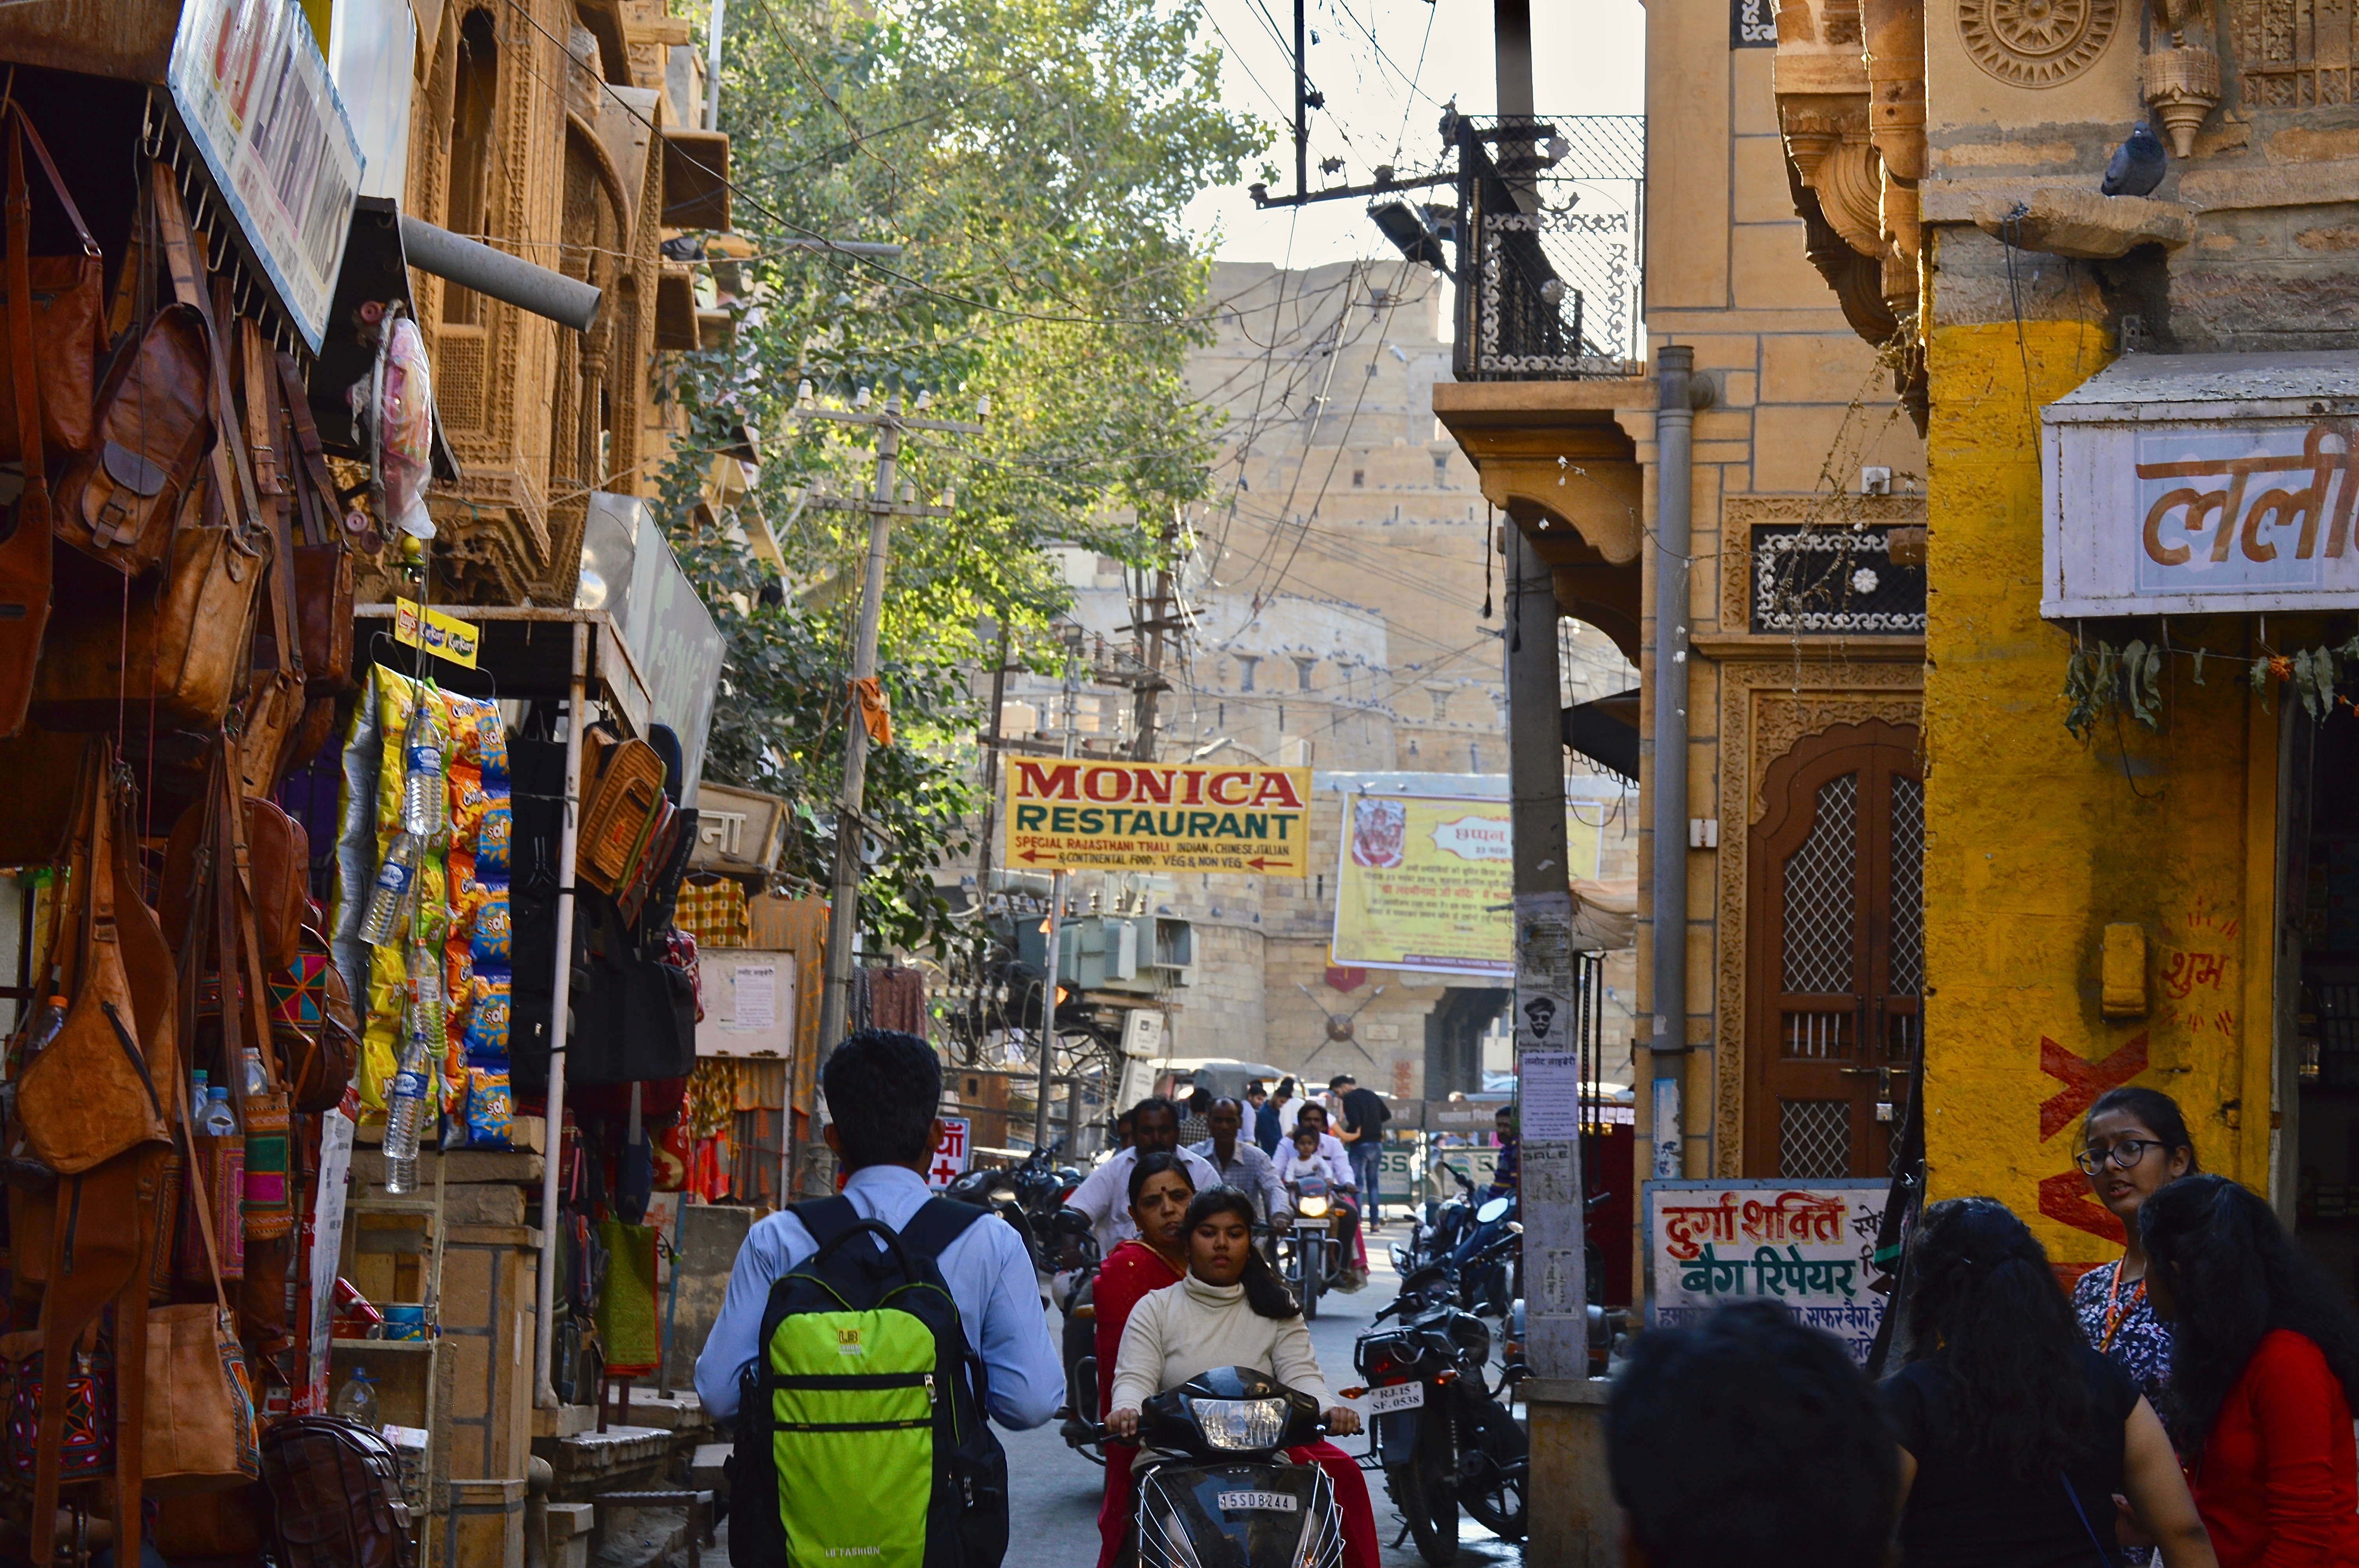 A Photo Journey Through Jaisalmer, India’s “Golden City”